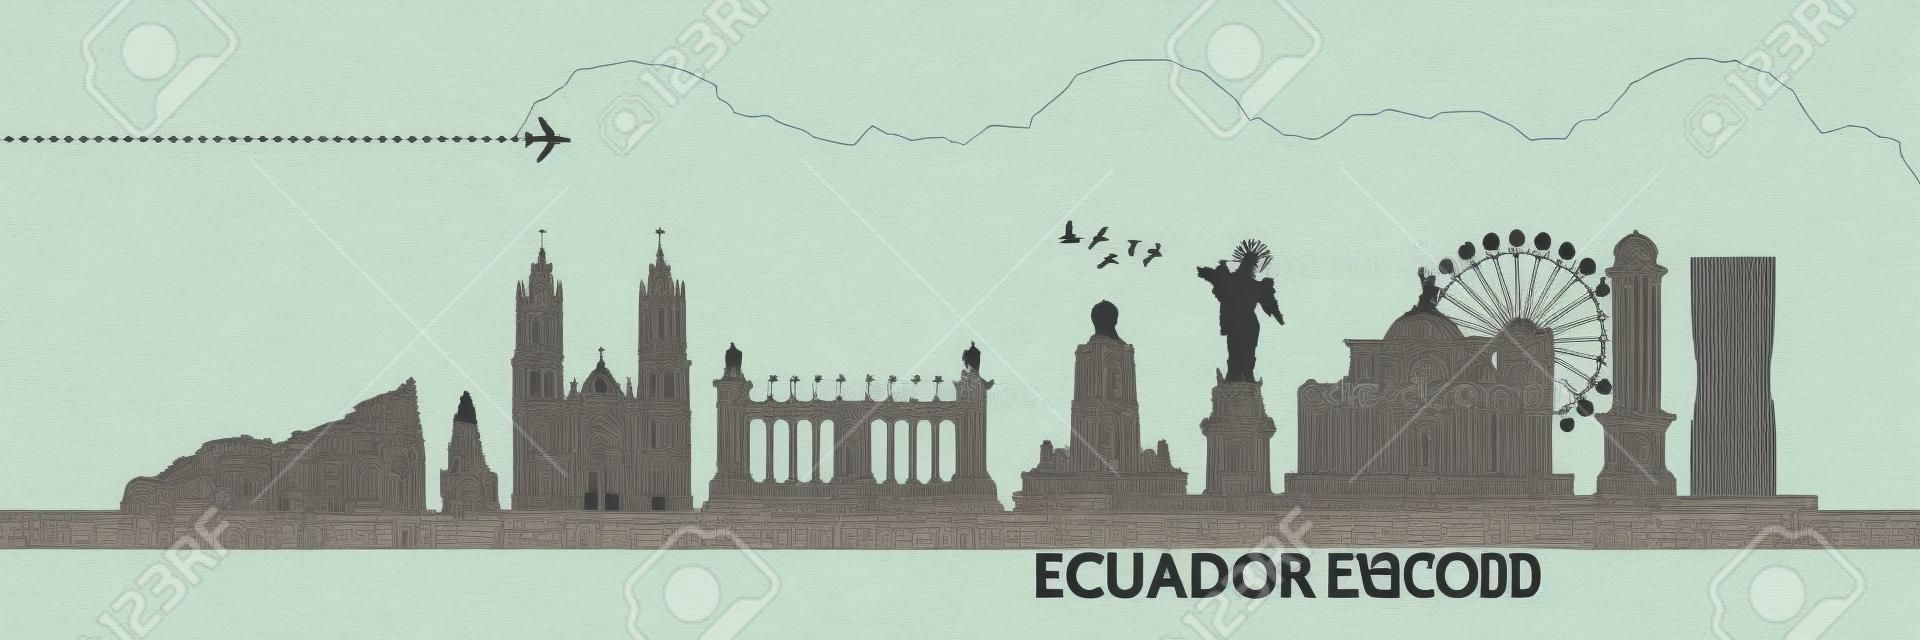 Ecuador travel destination grand vector illustration.